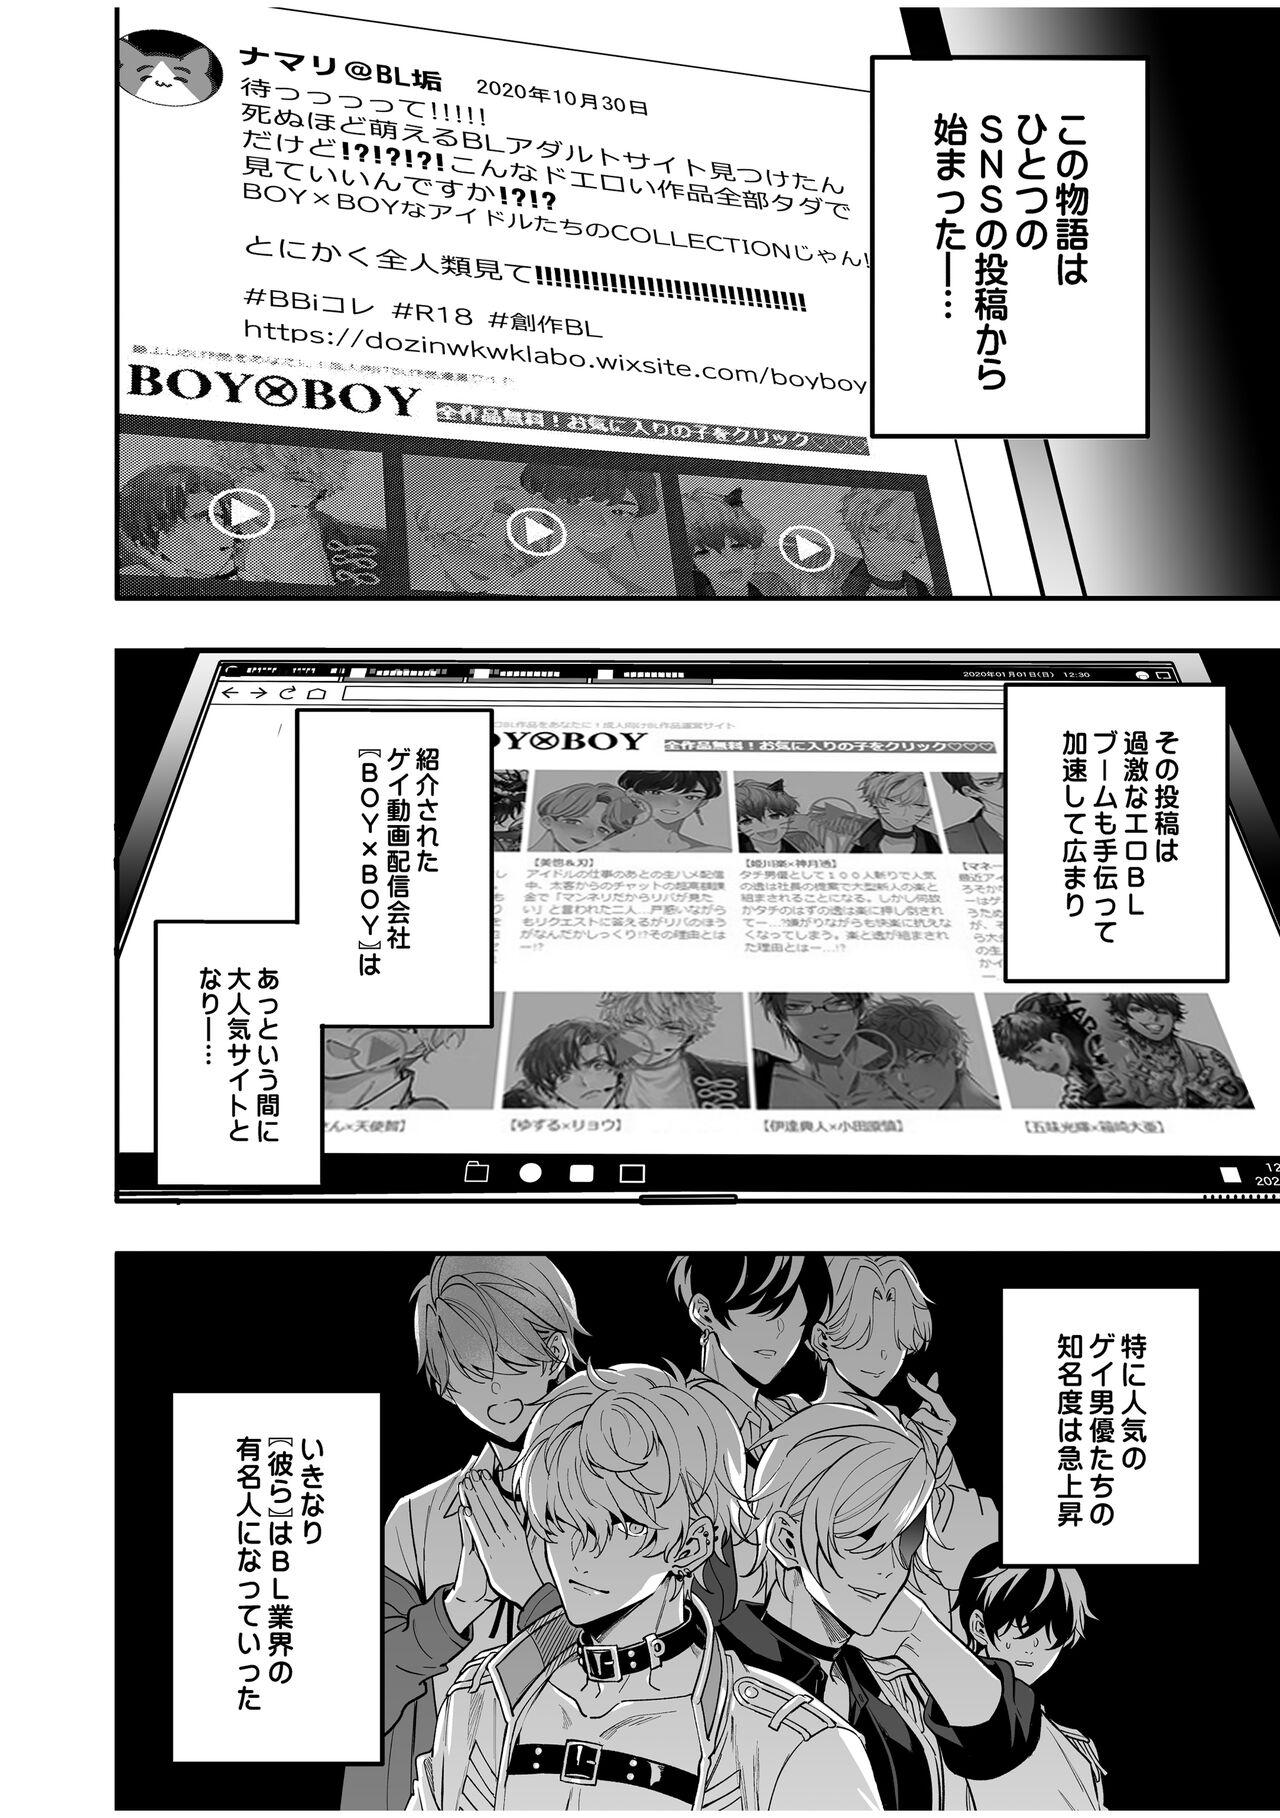 Shemale BOY x BOY IDOL COLLECTION! Vol.2 - Original Office - Page 8